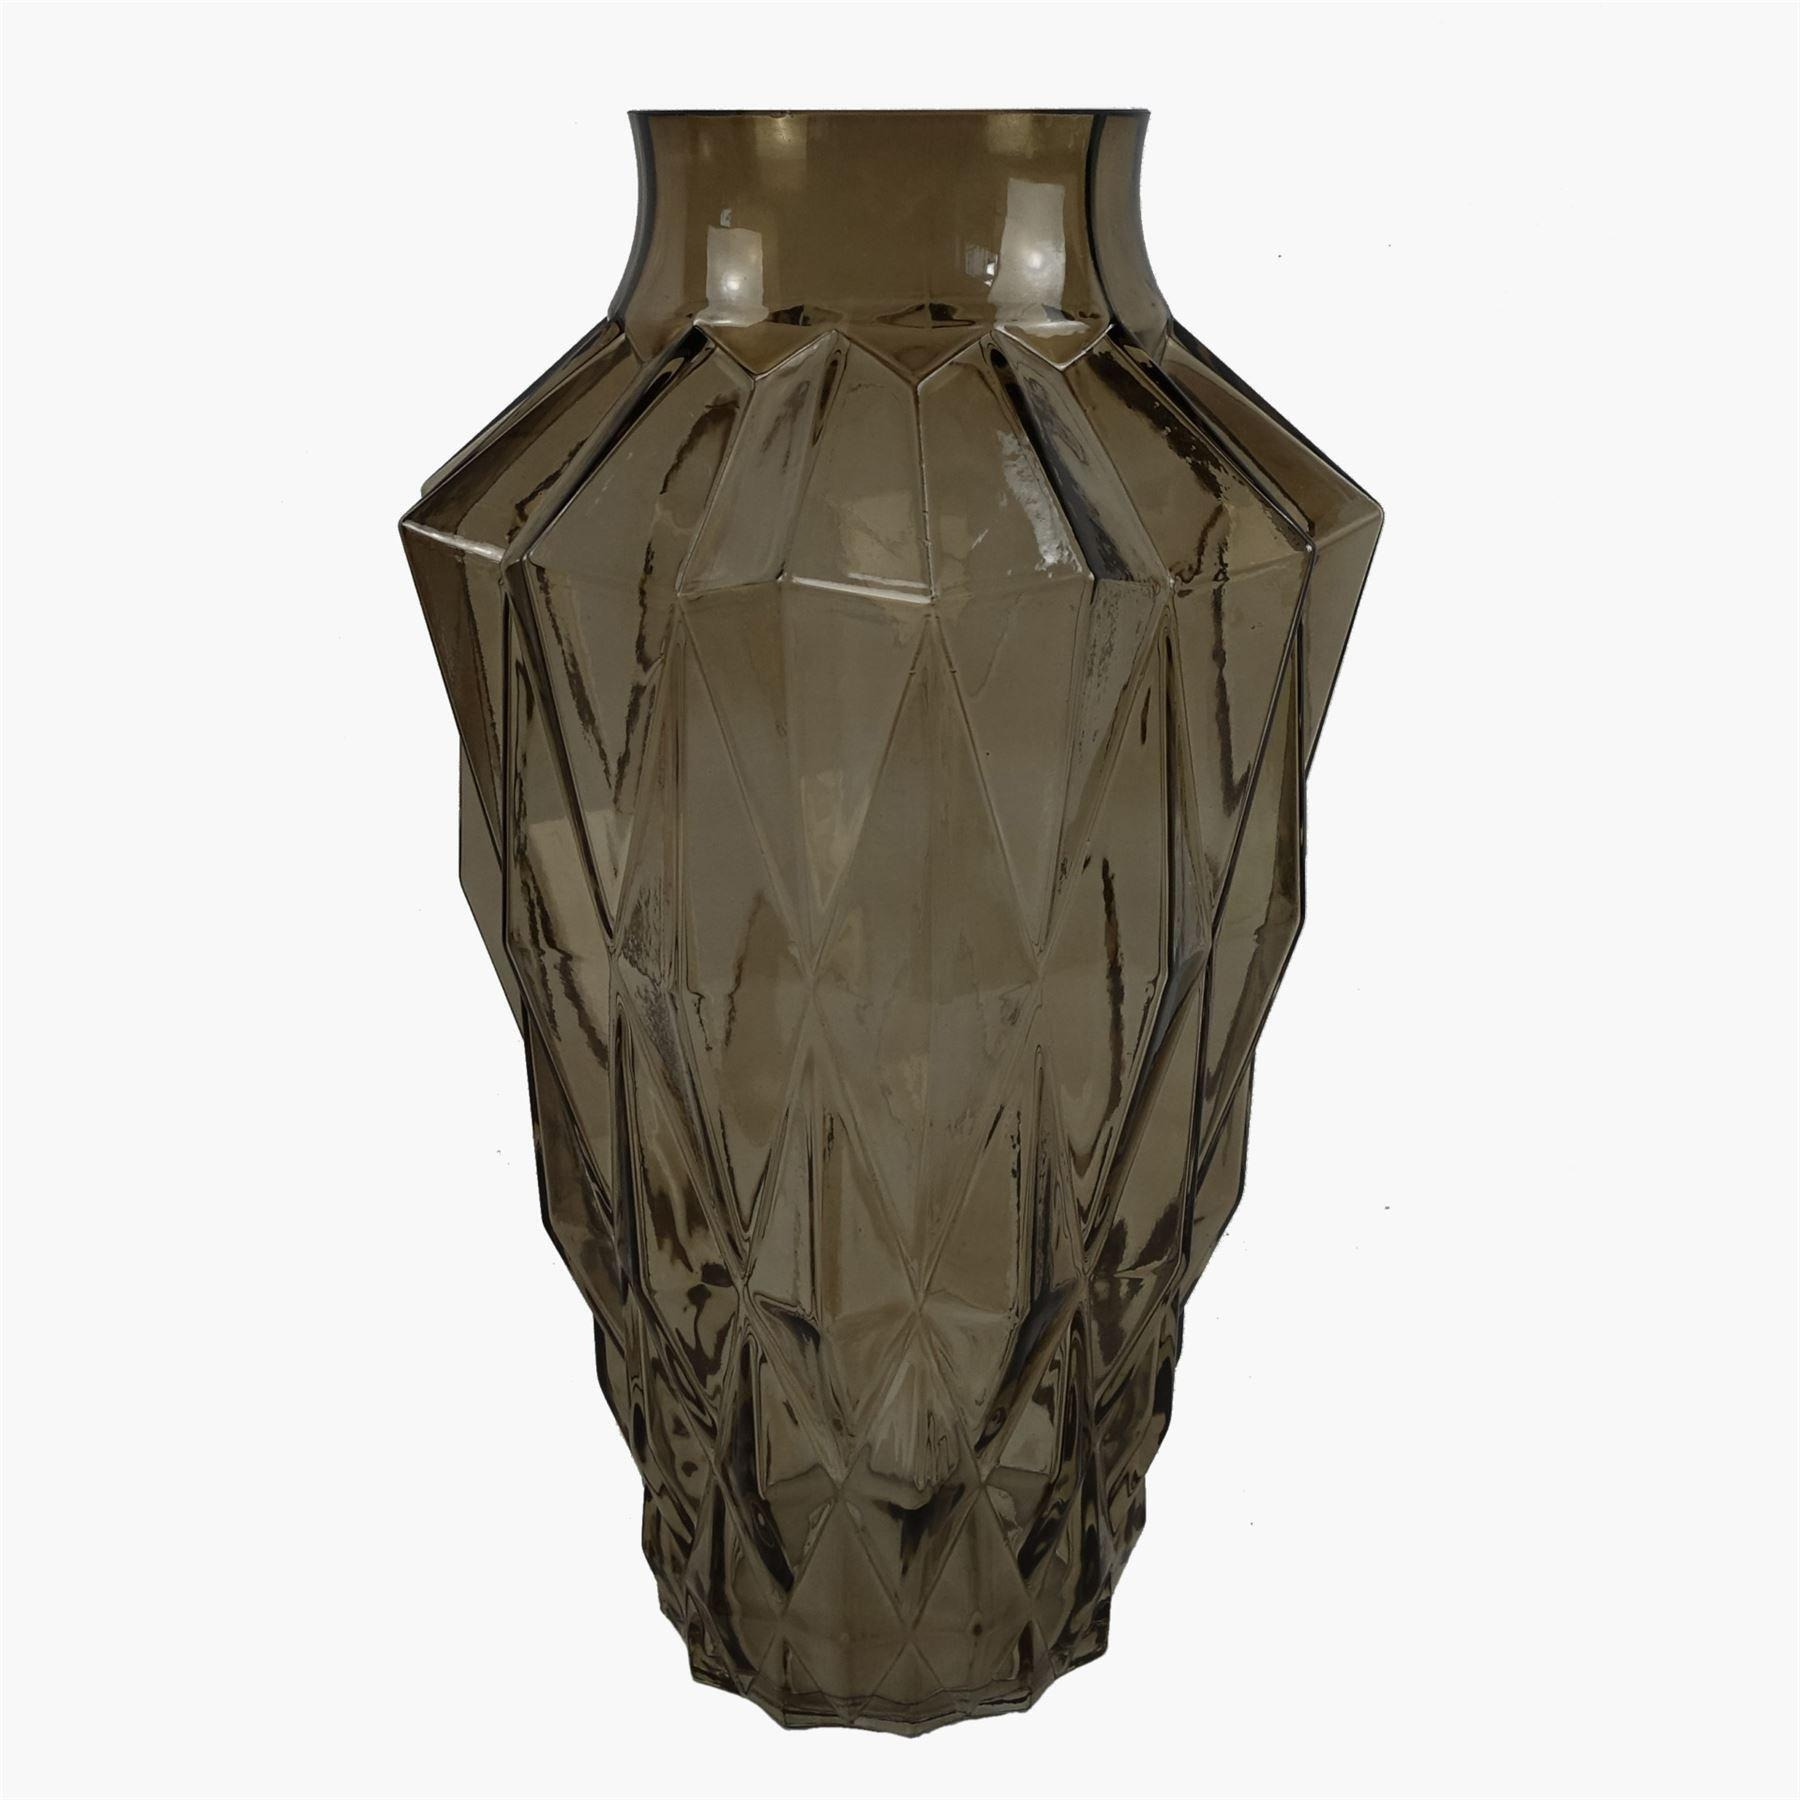 30cm Brown Geometric Glass Vase - image 1